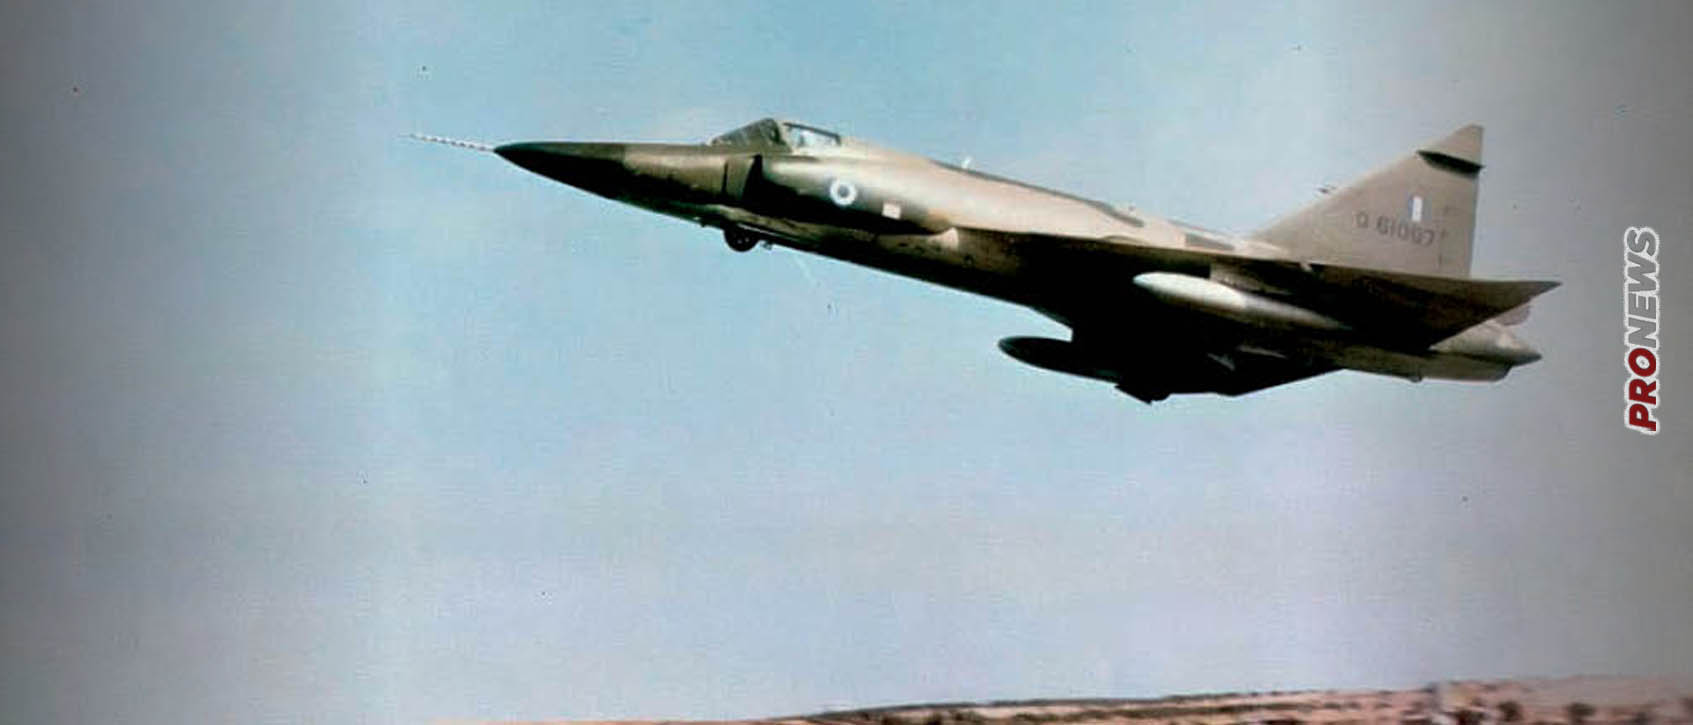 F-102A Delta Dagger: Το πρώτο «δελταπτέρυγο» μαχητικό της Ελληνικής Αεροπορίας